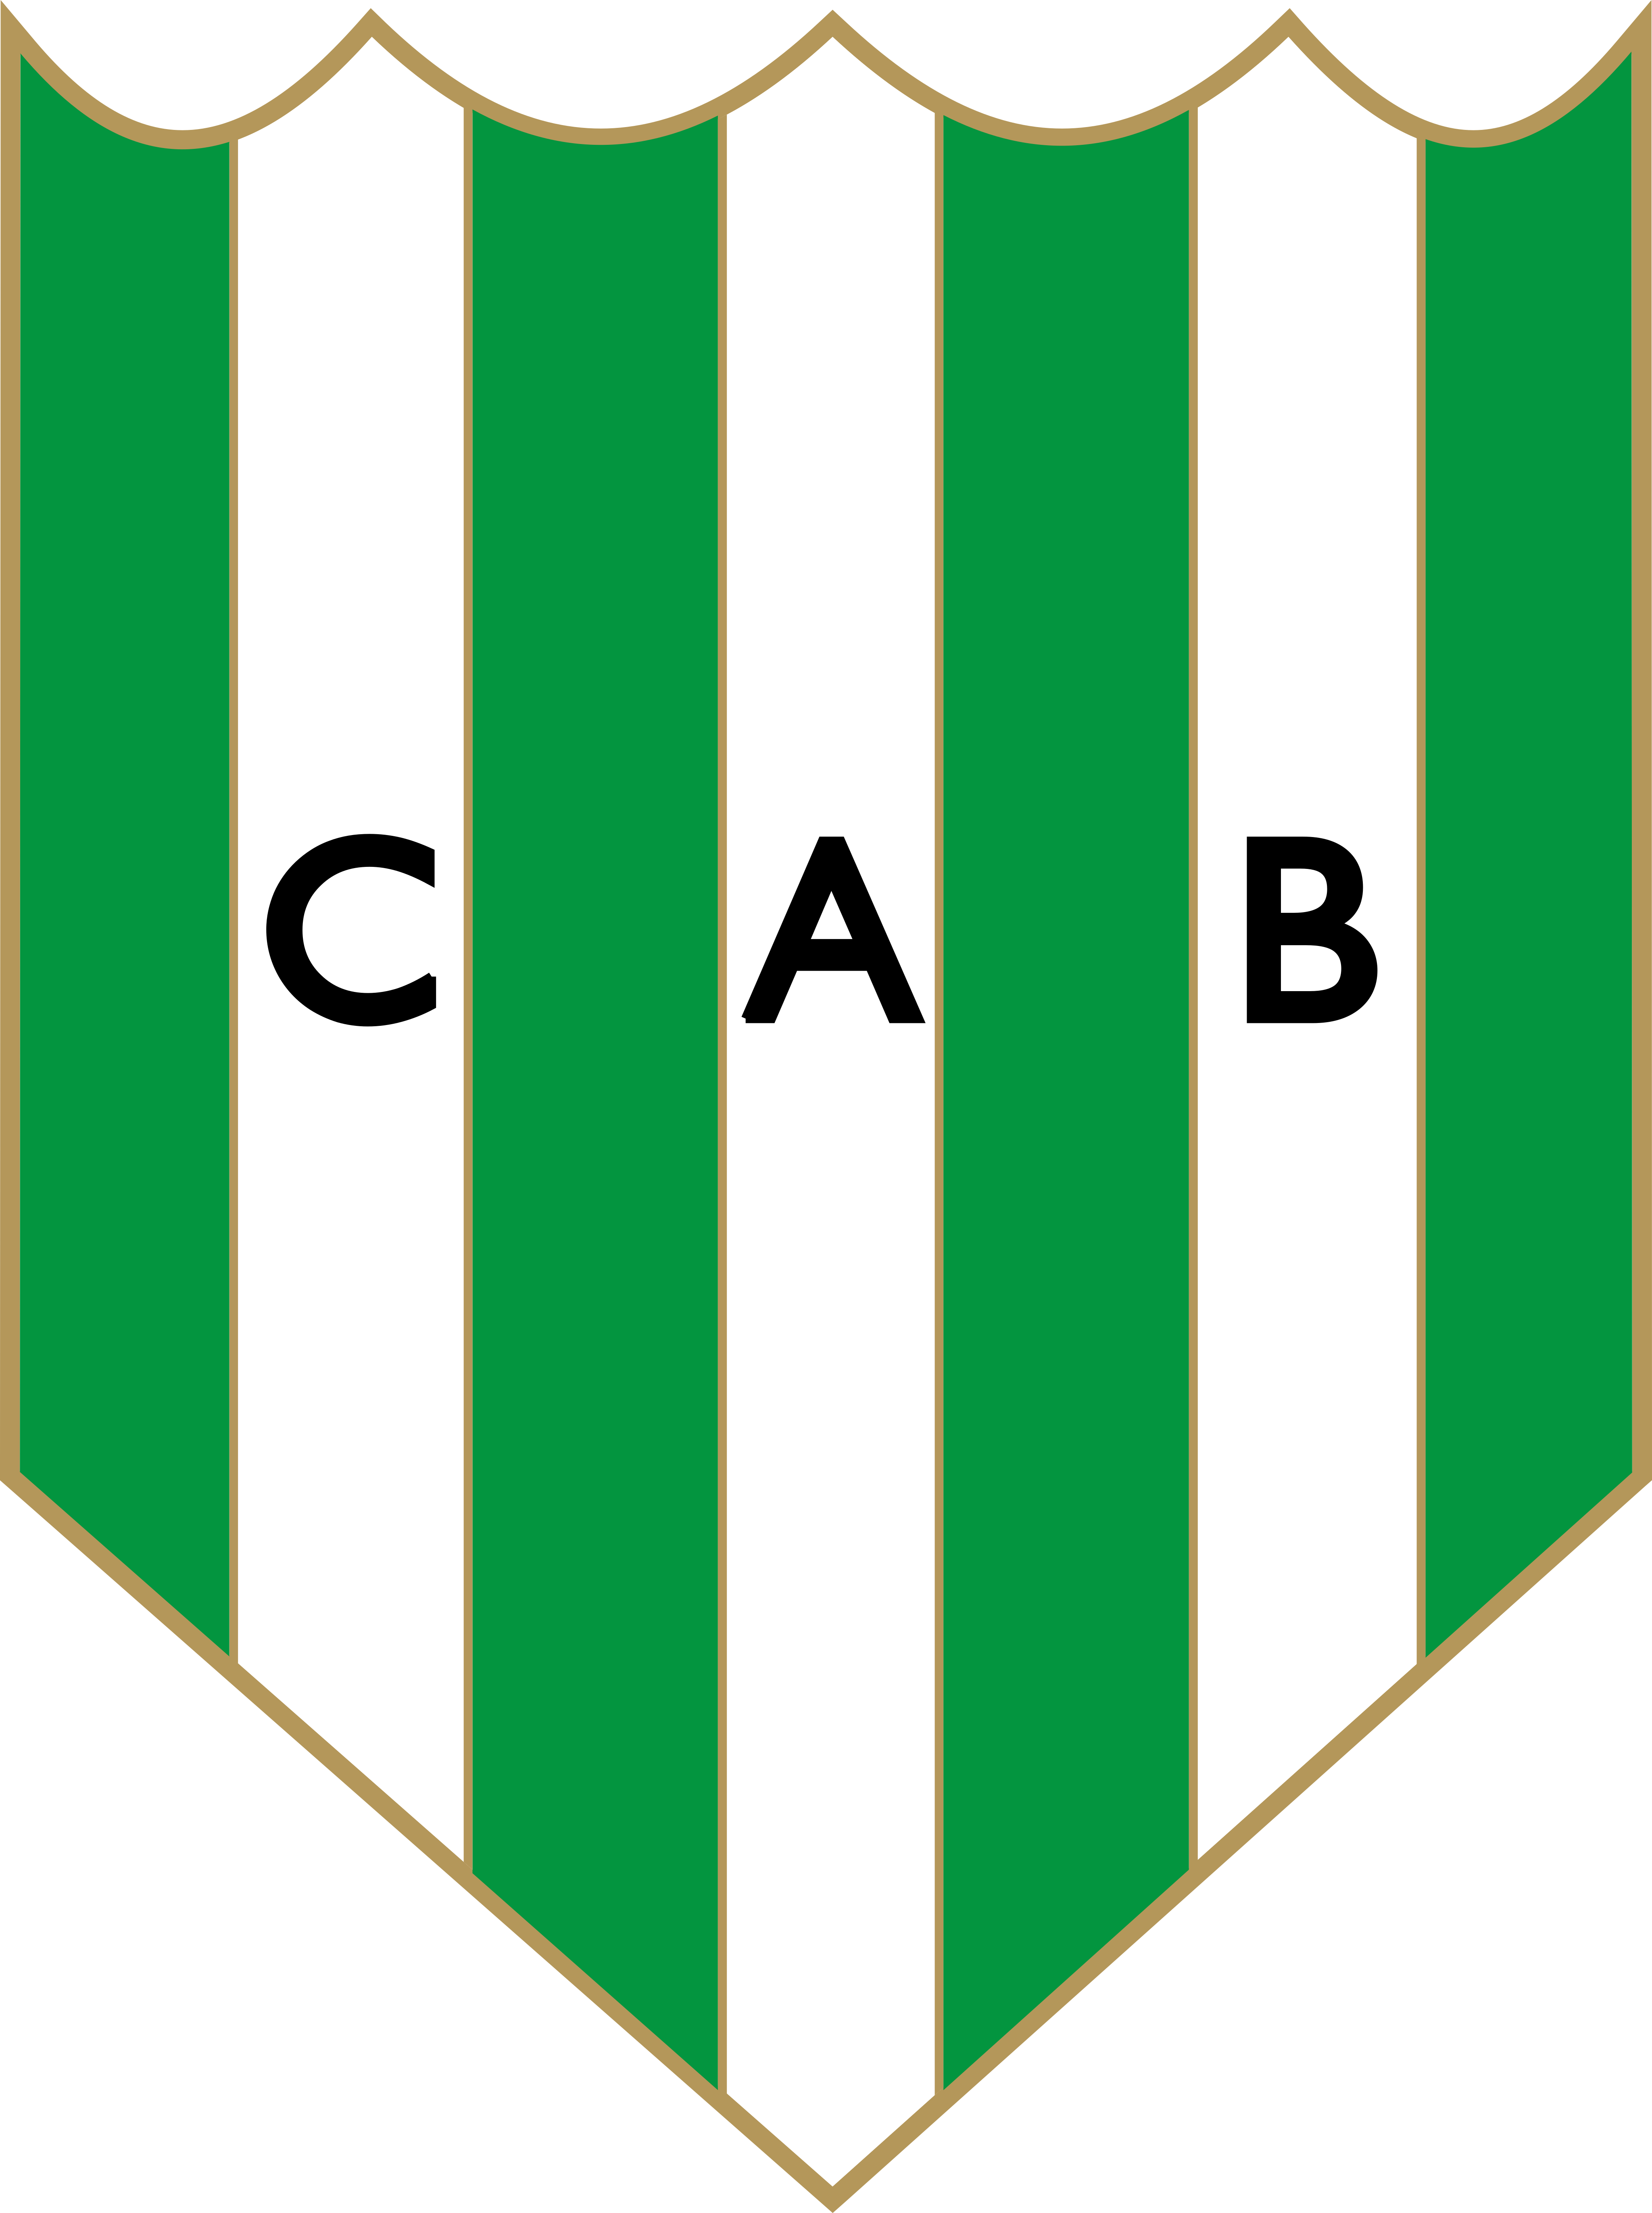 banfield logo - Club Atlético Banfield Logo